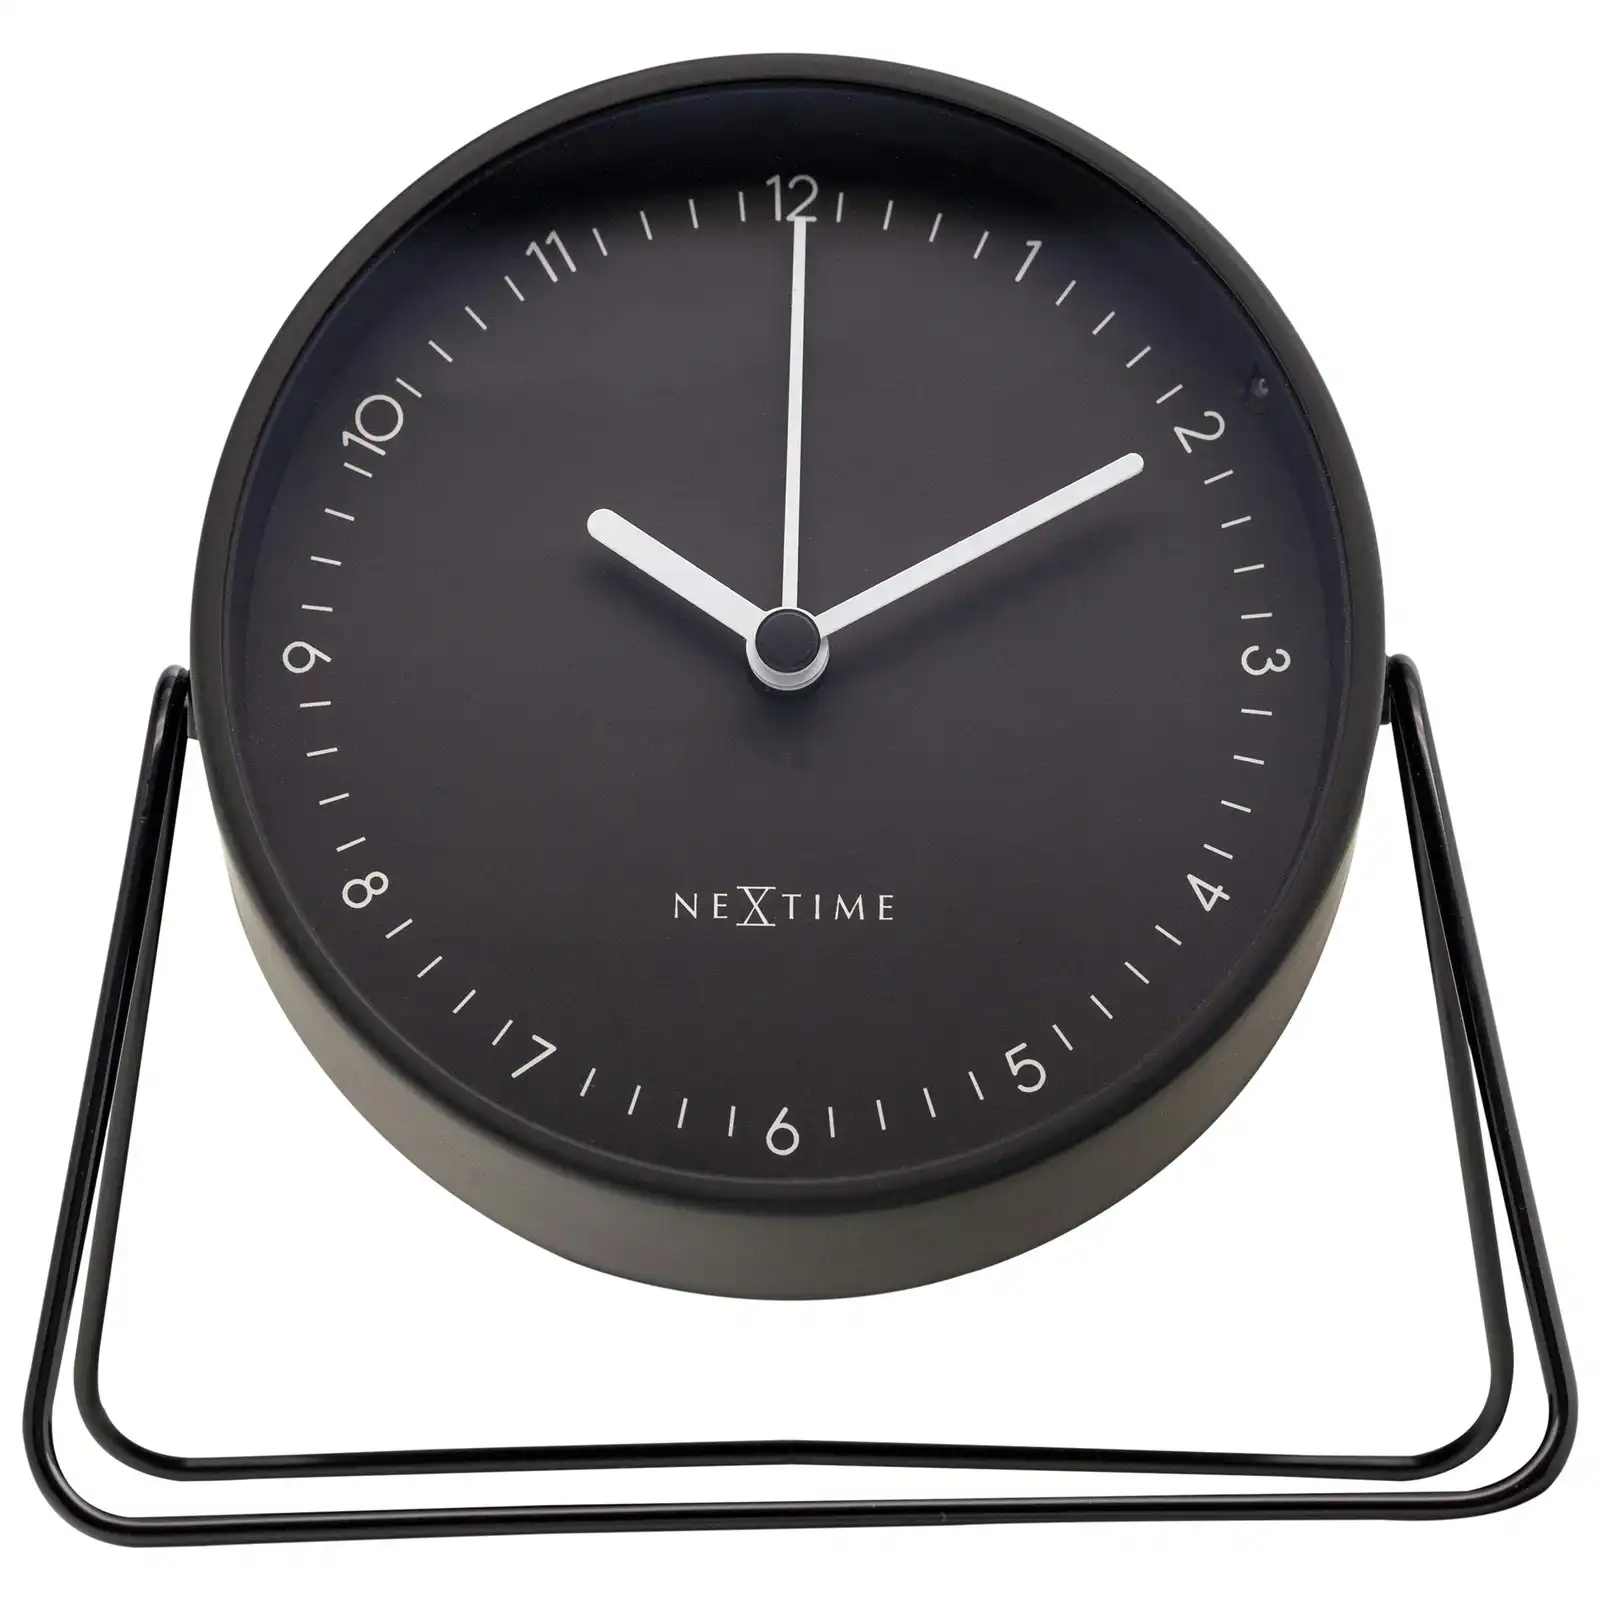 NeXtime Berlin Metal 14x13cm Analogue Table/Desk Alarm Clock w/Night Light Black